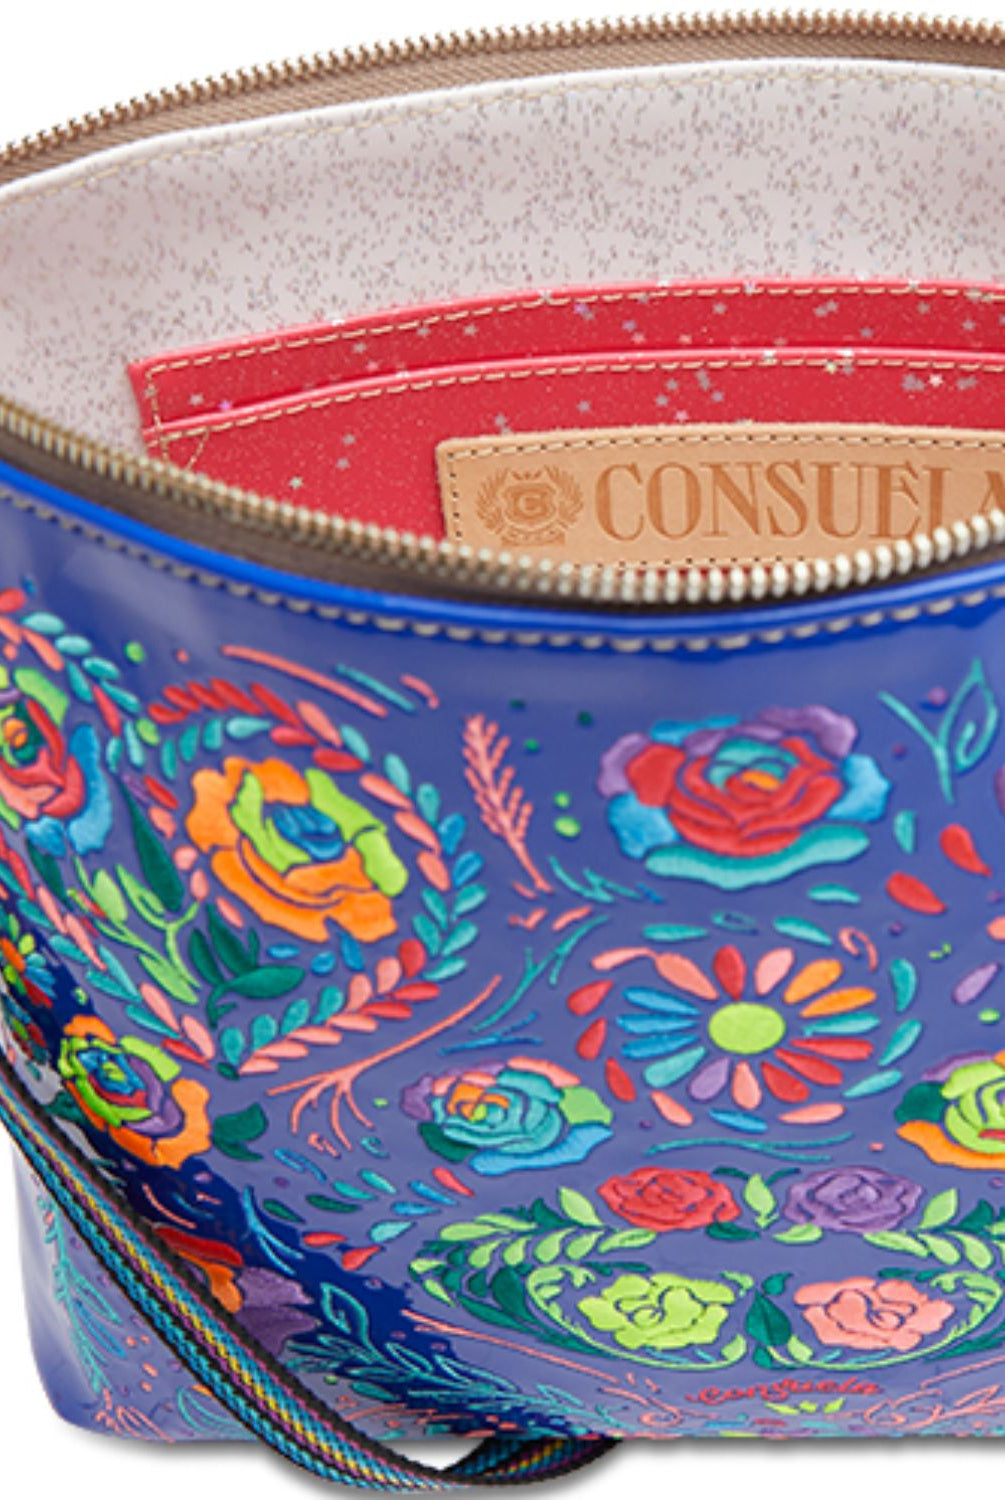 Consuela Downtown Crossbody Bag, Mango |Stuffology Boutique-Handbags-Consuela-Stuffology - Where Vintage Meets Modern, A Boutique for Real Women in Crosbyton, TX